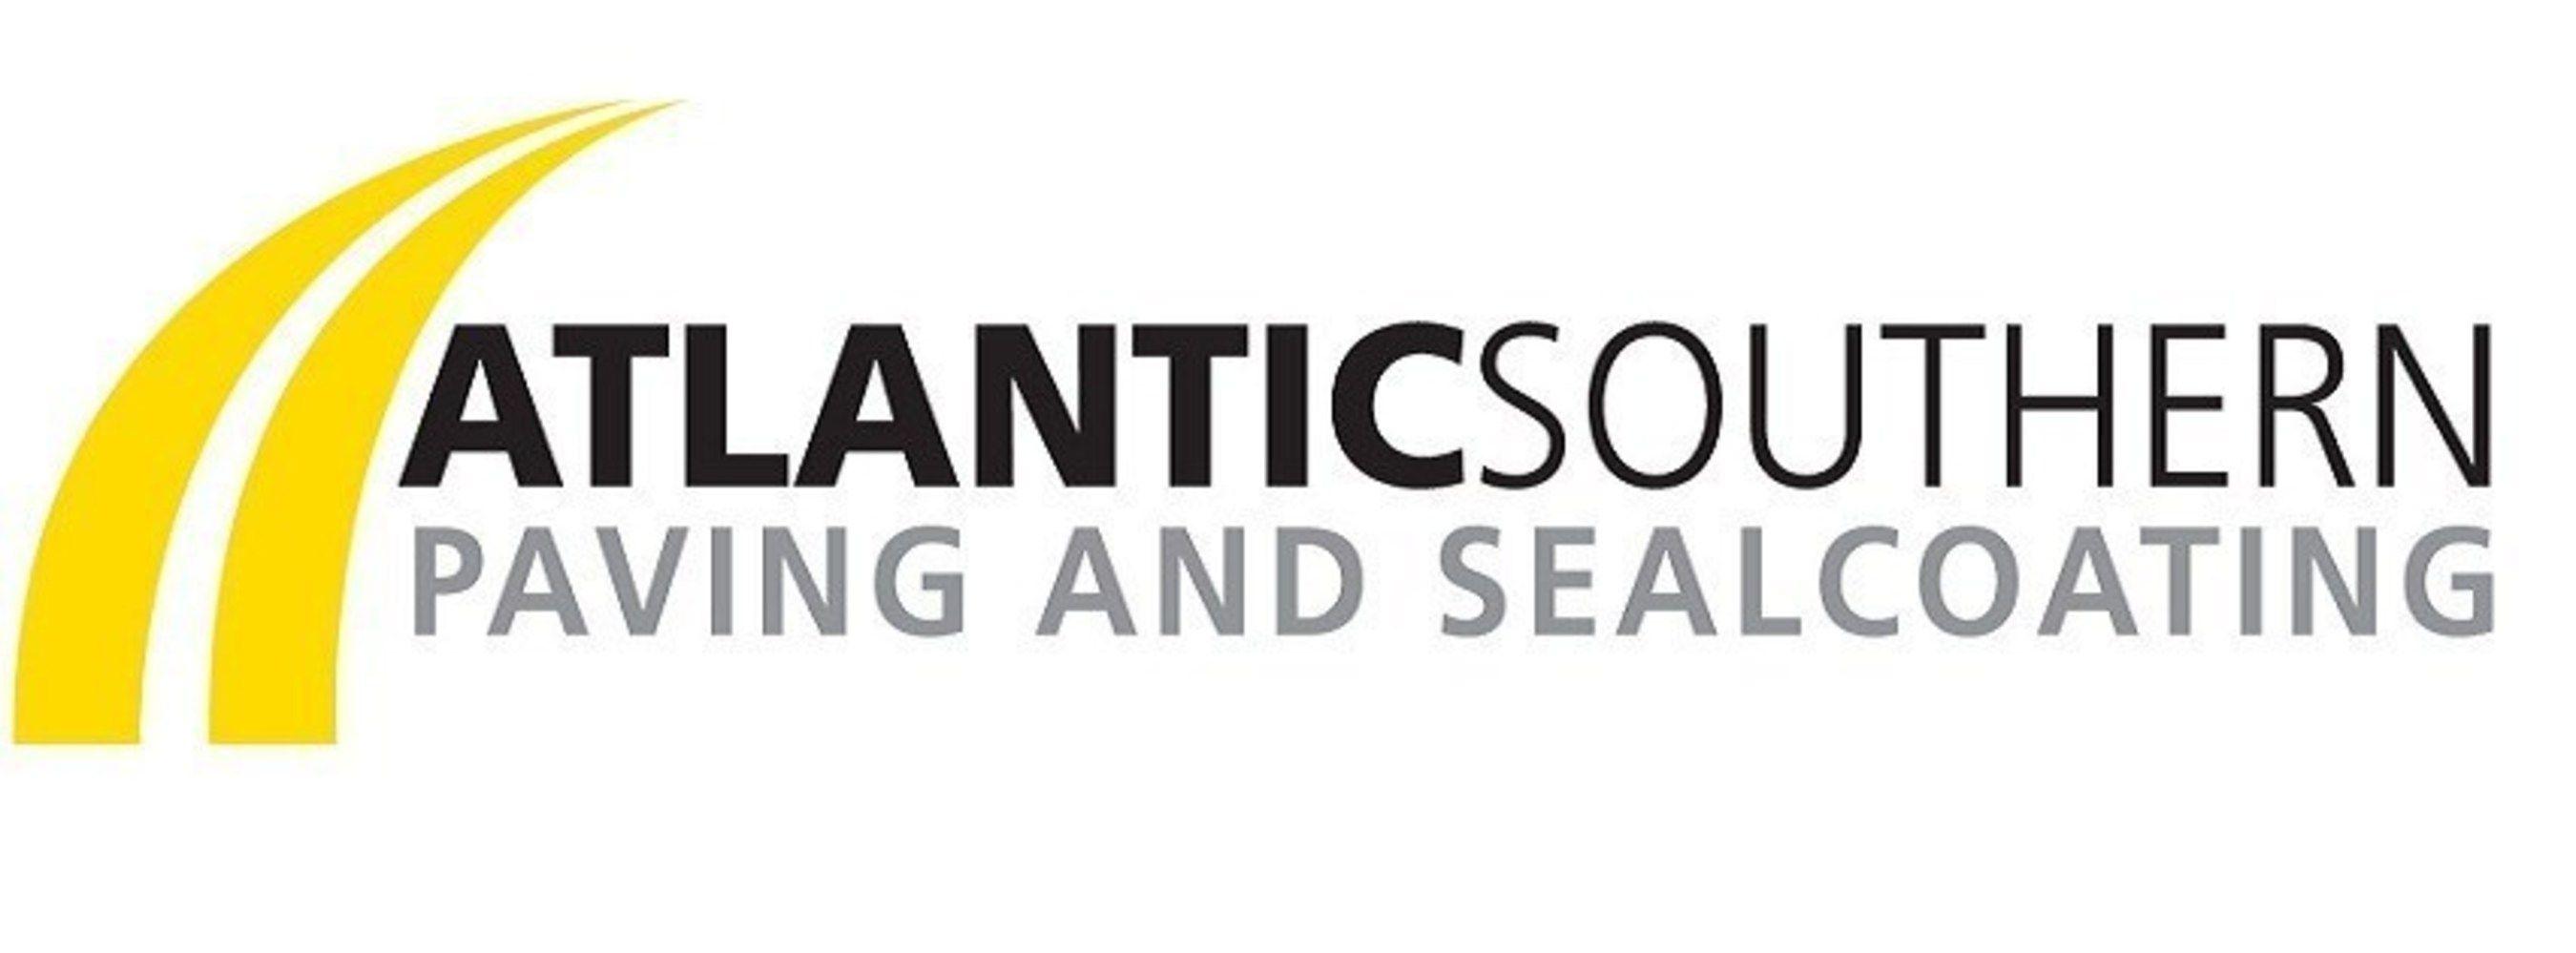 Sealcoating Logo - Atlantic Southern Paving and Sealcoating Ranked Among 50 Fastest ...